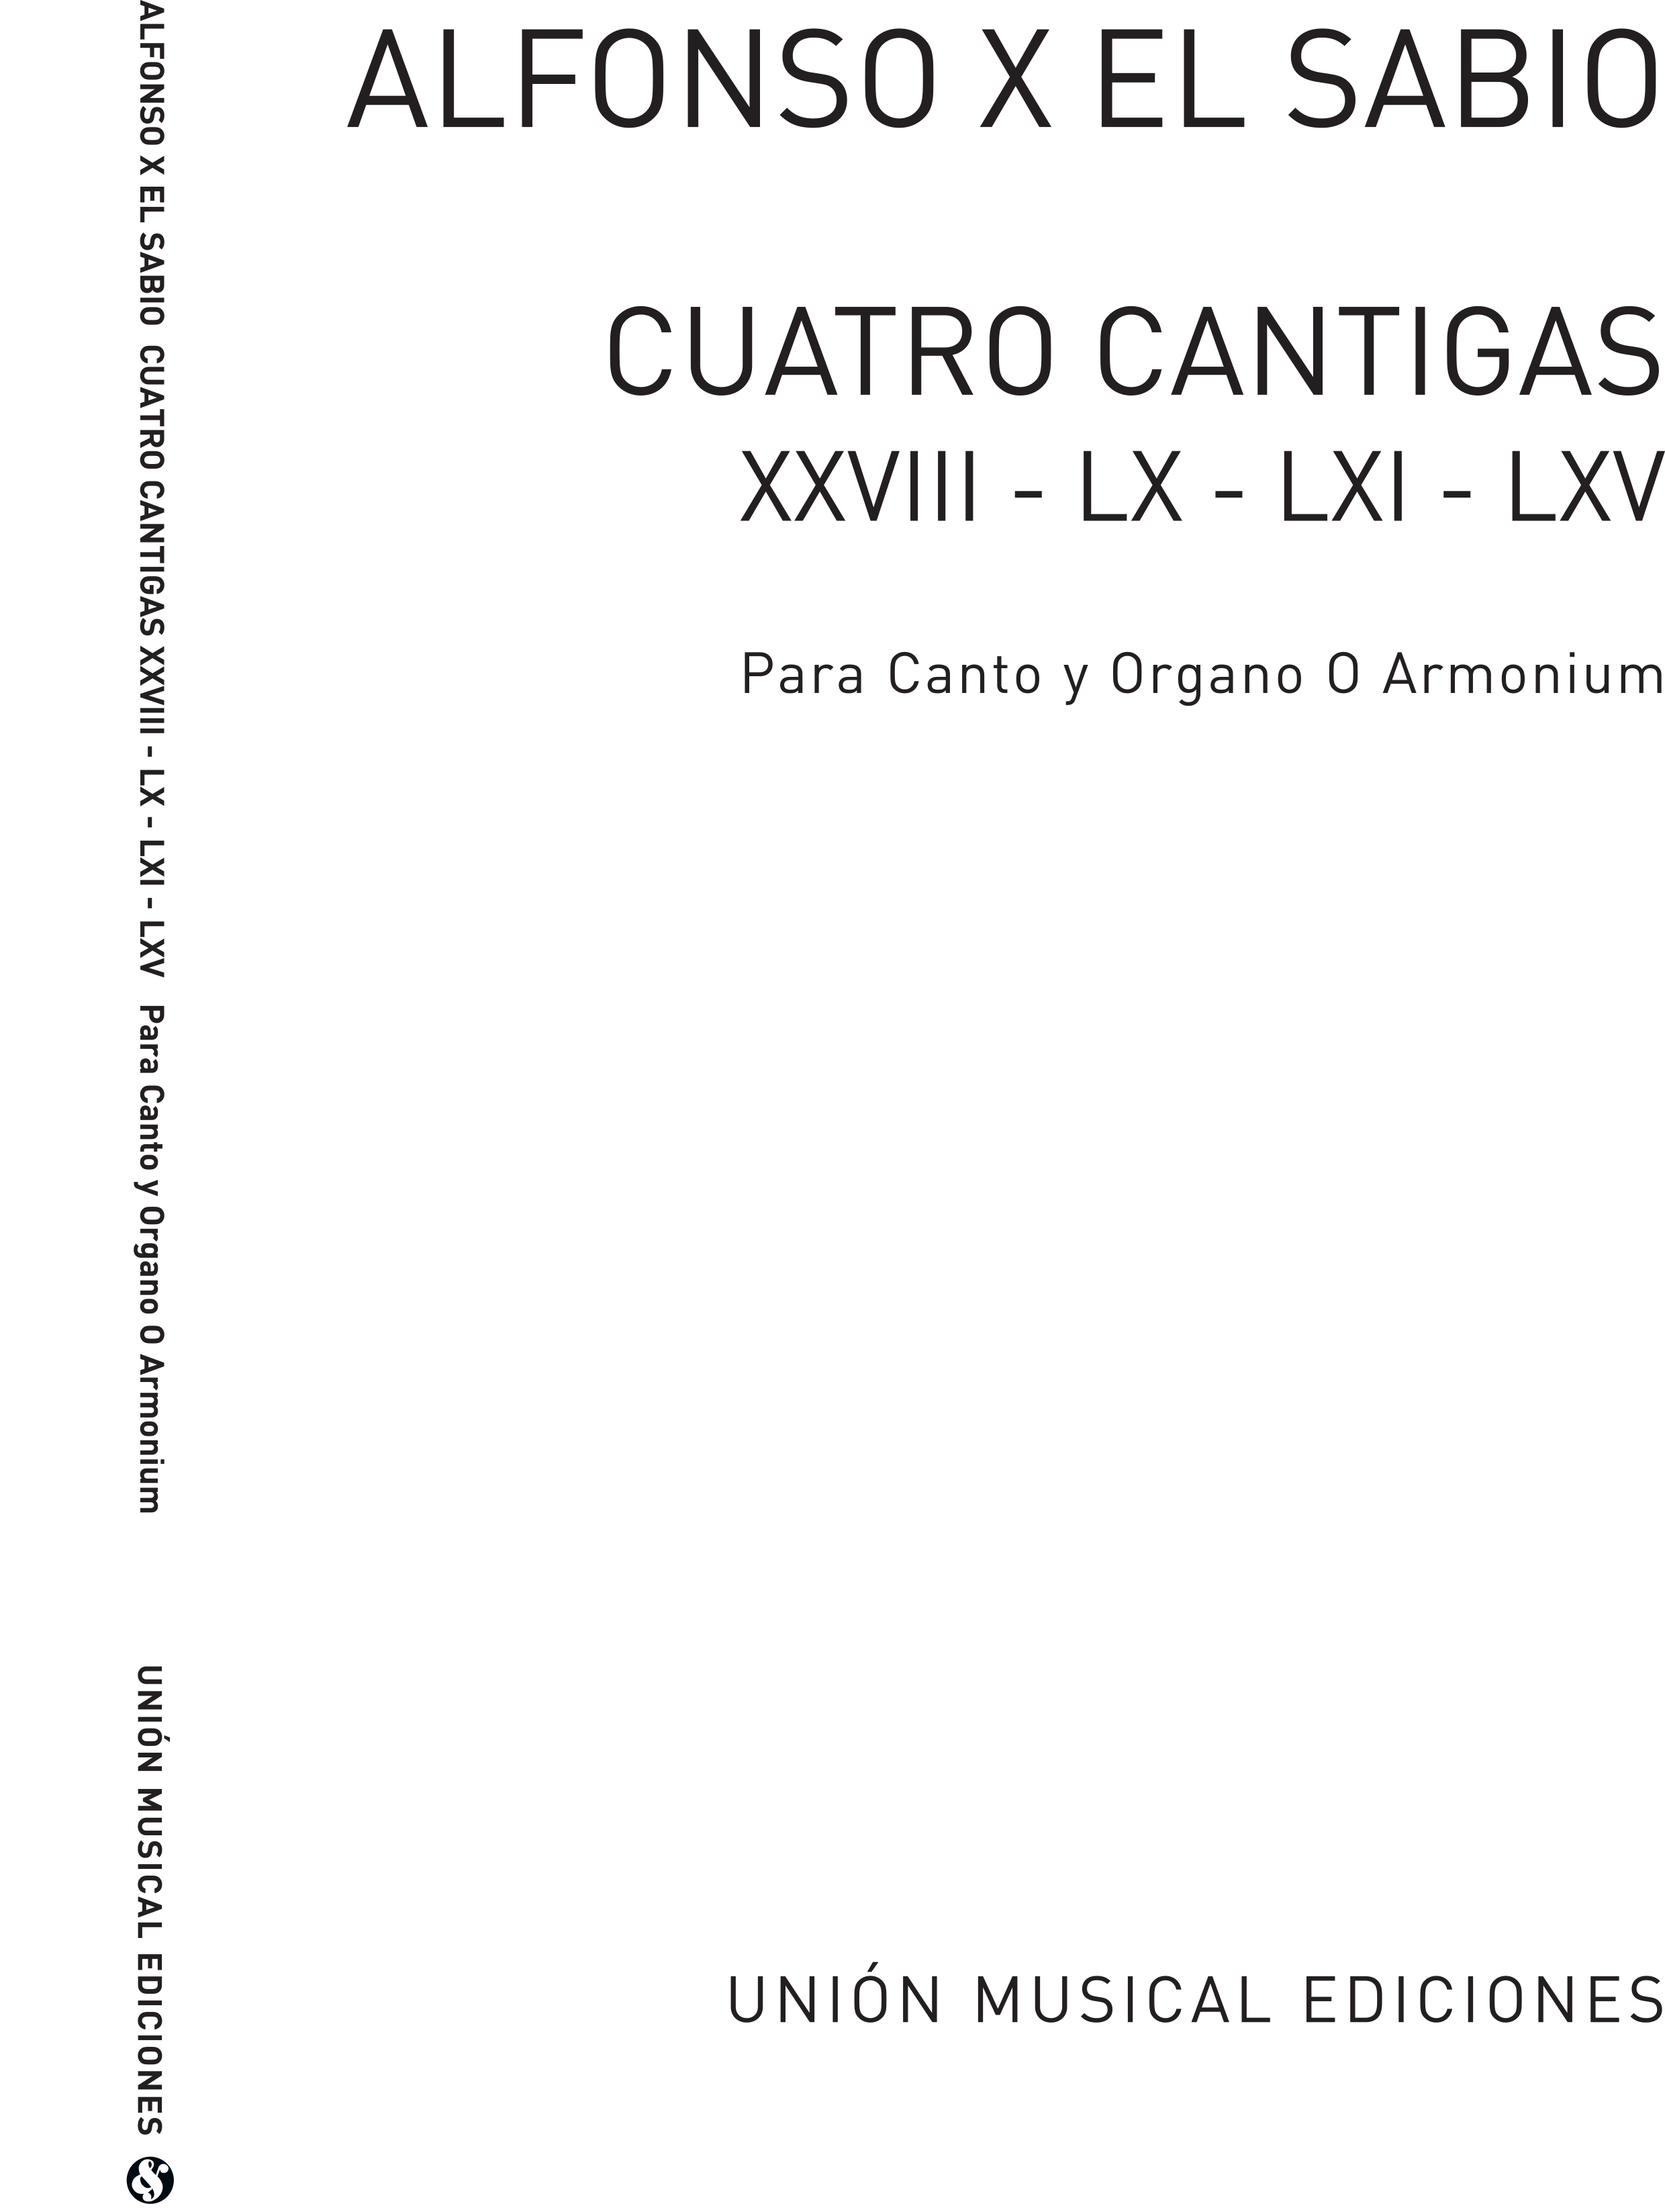 Alfonso X. El Sabio: Cuatro Cantigas for Voice (Transc.Pedrell): Voice: